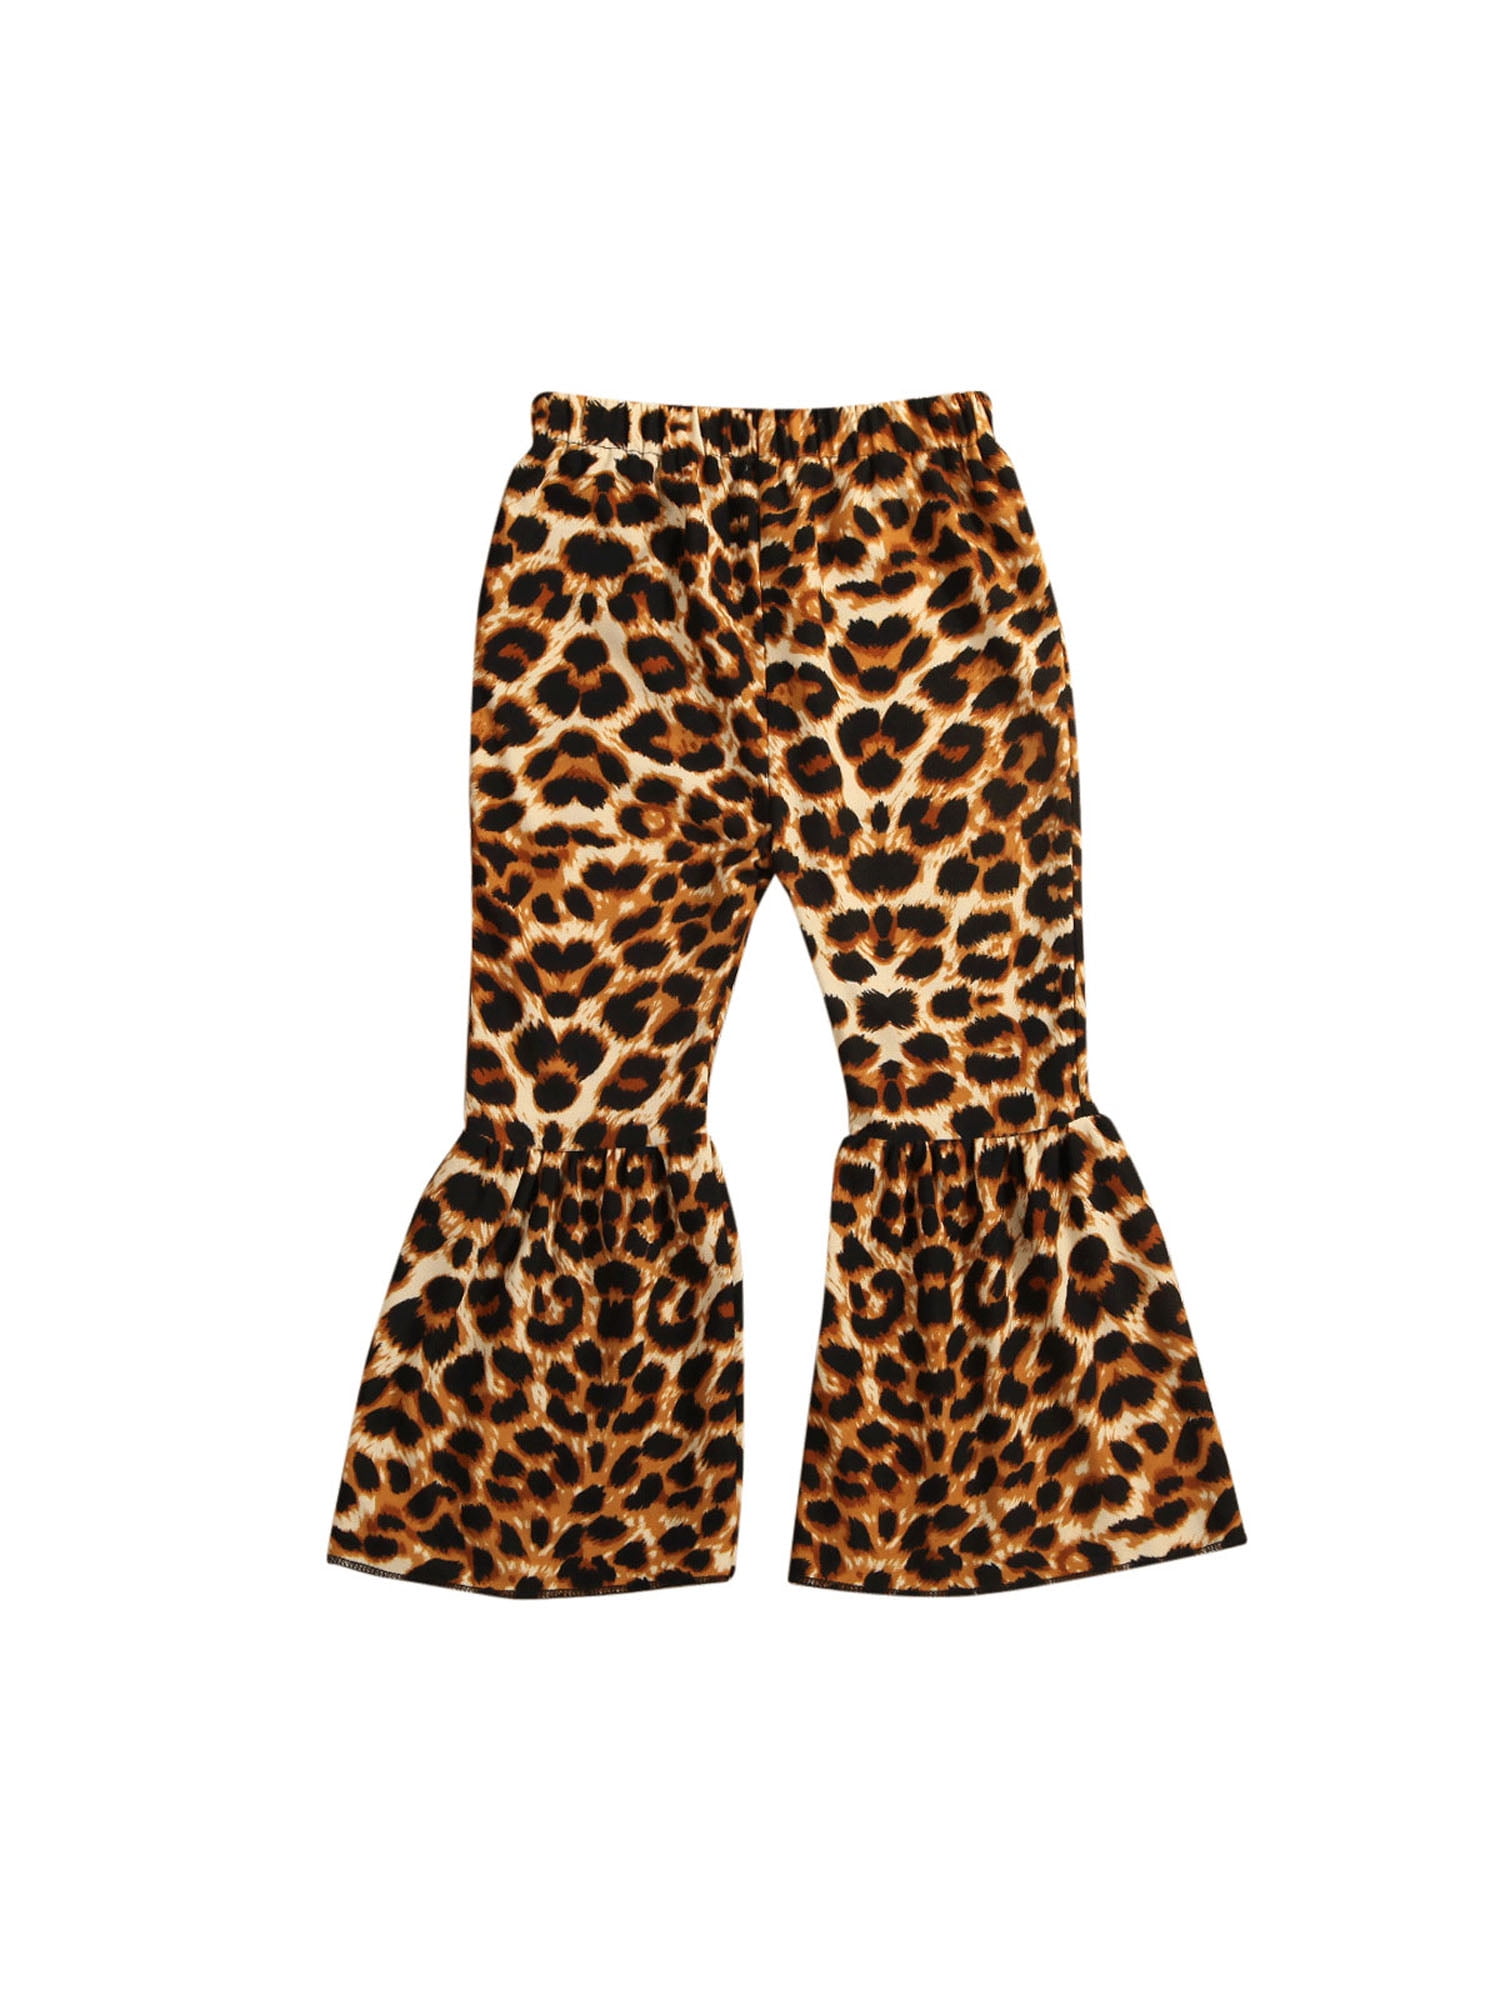 Kosusanill Girls Ruffle Leggings Leopard Print Bell Bottoms Flare Pants Kids Toddler Baby Fall Trousers